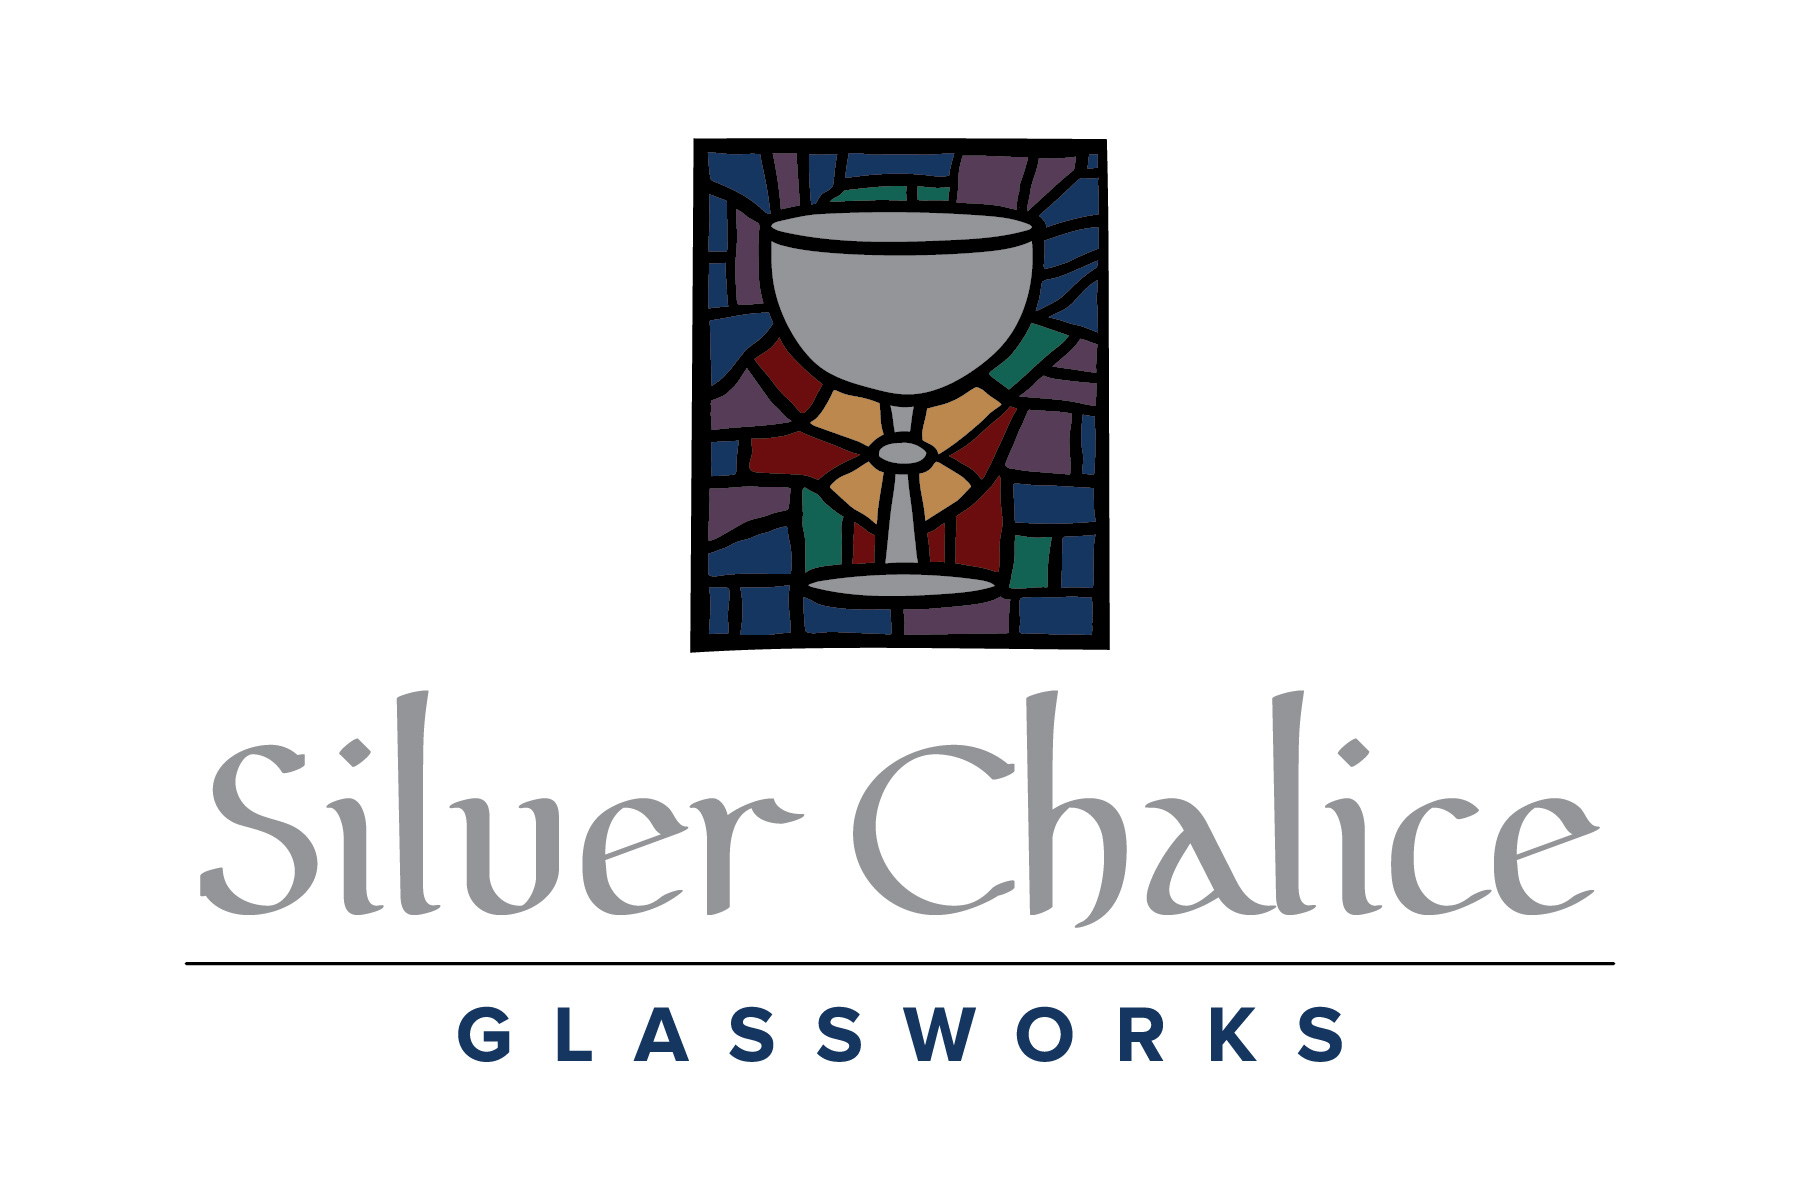 Silver Chalice Glassworks